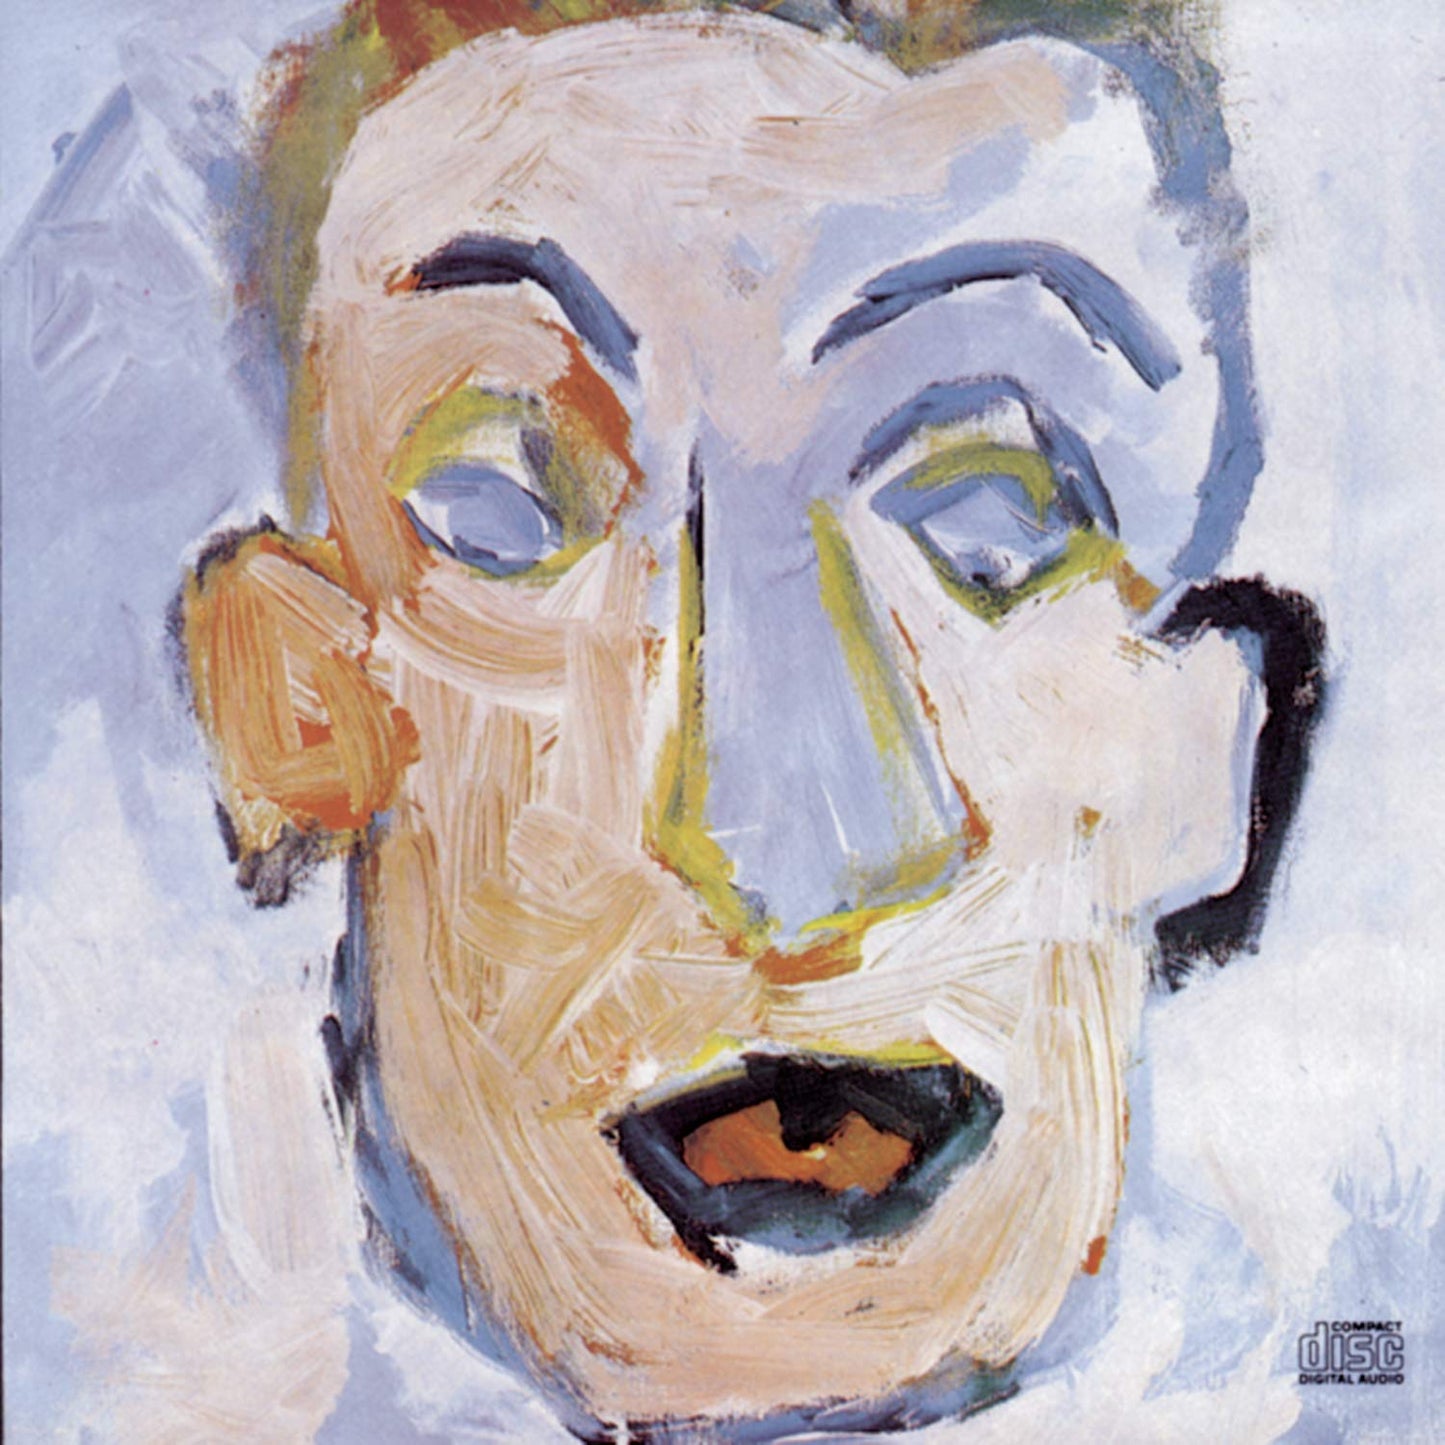 CD - Bob Dylan - Self Portrait